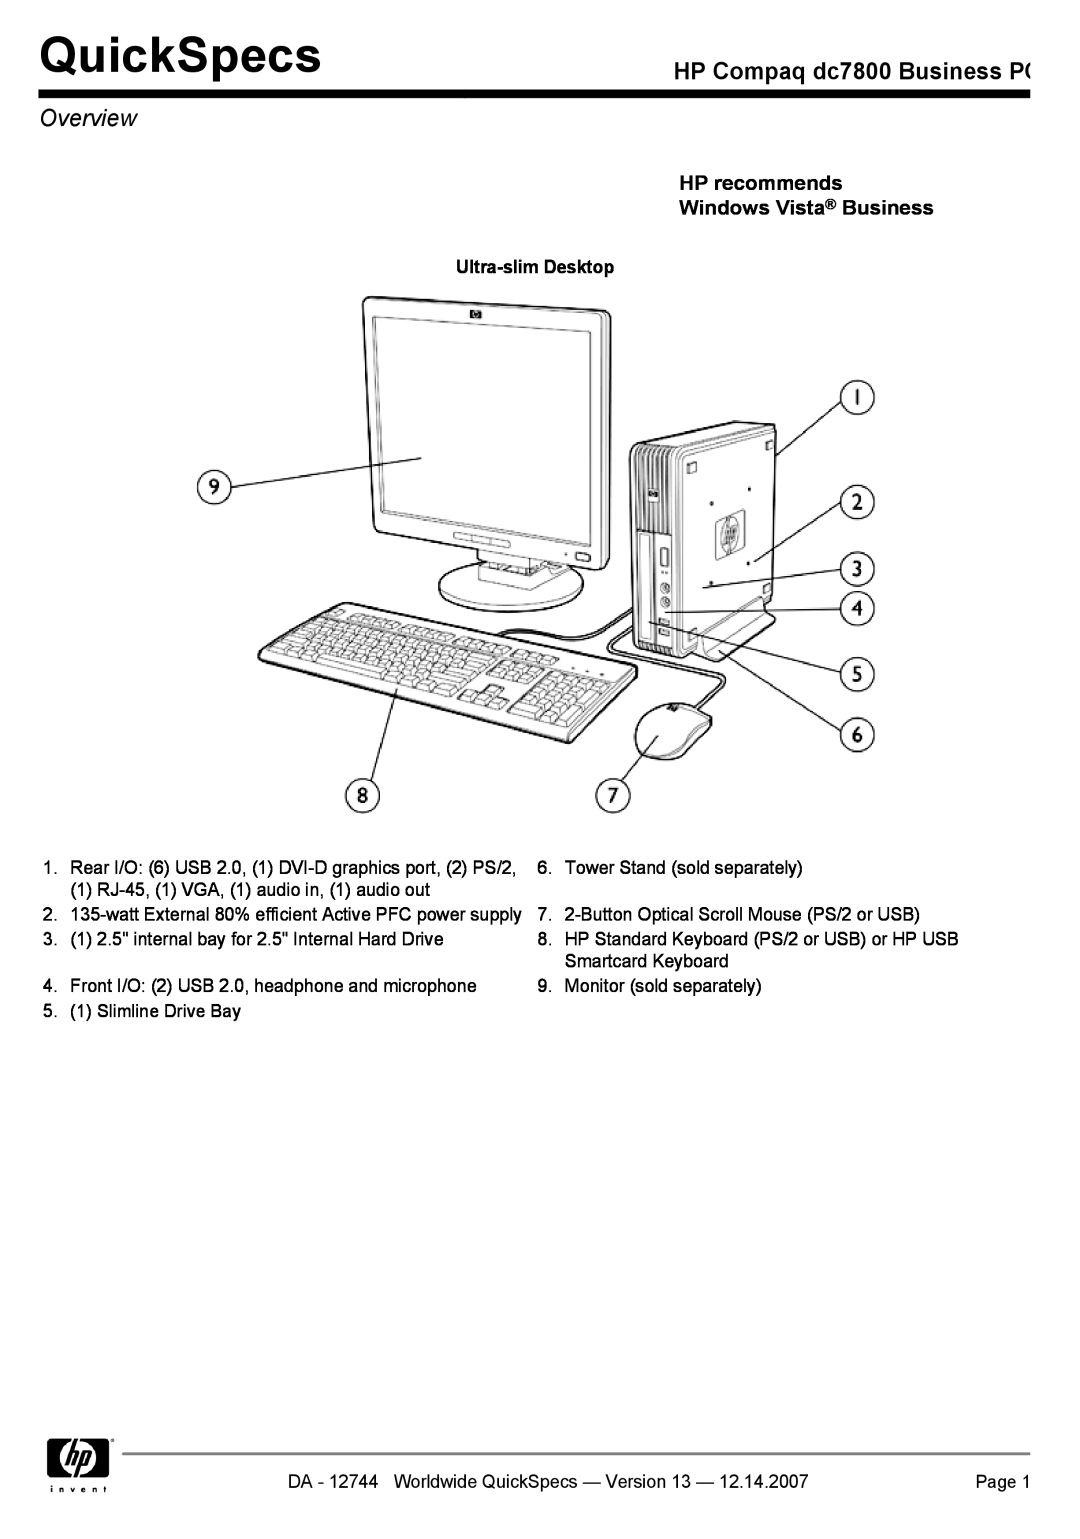 Compaq manual QuickSpecs, HP Compaq dc7800 Business PC, Overview, HP recommends Windows Vista Business 